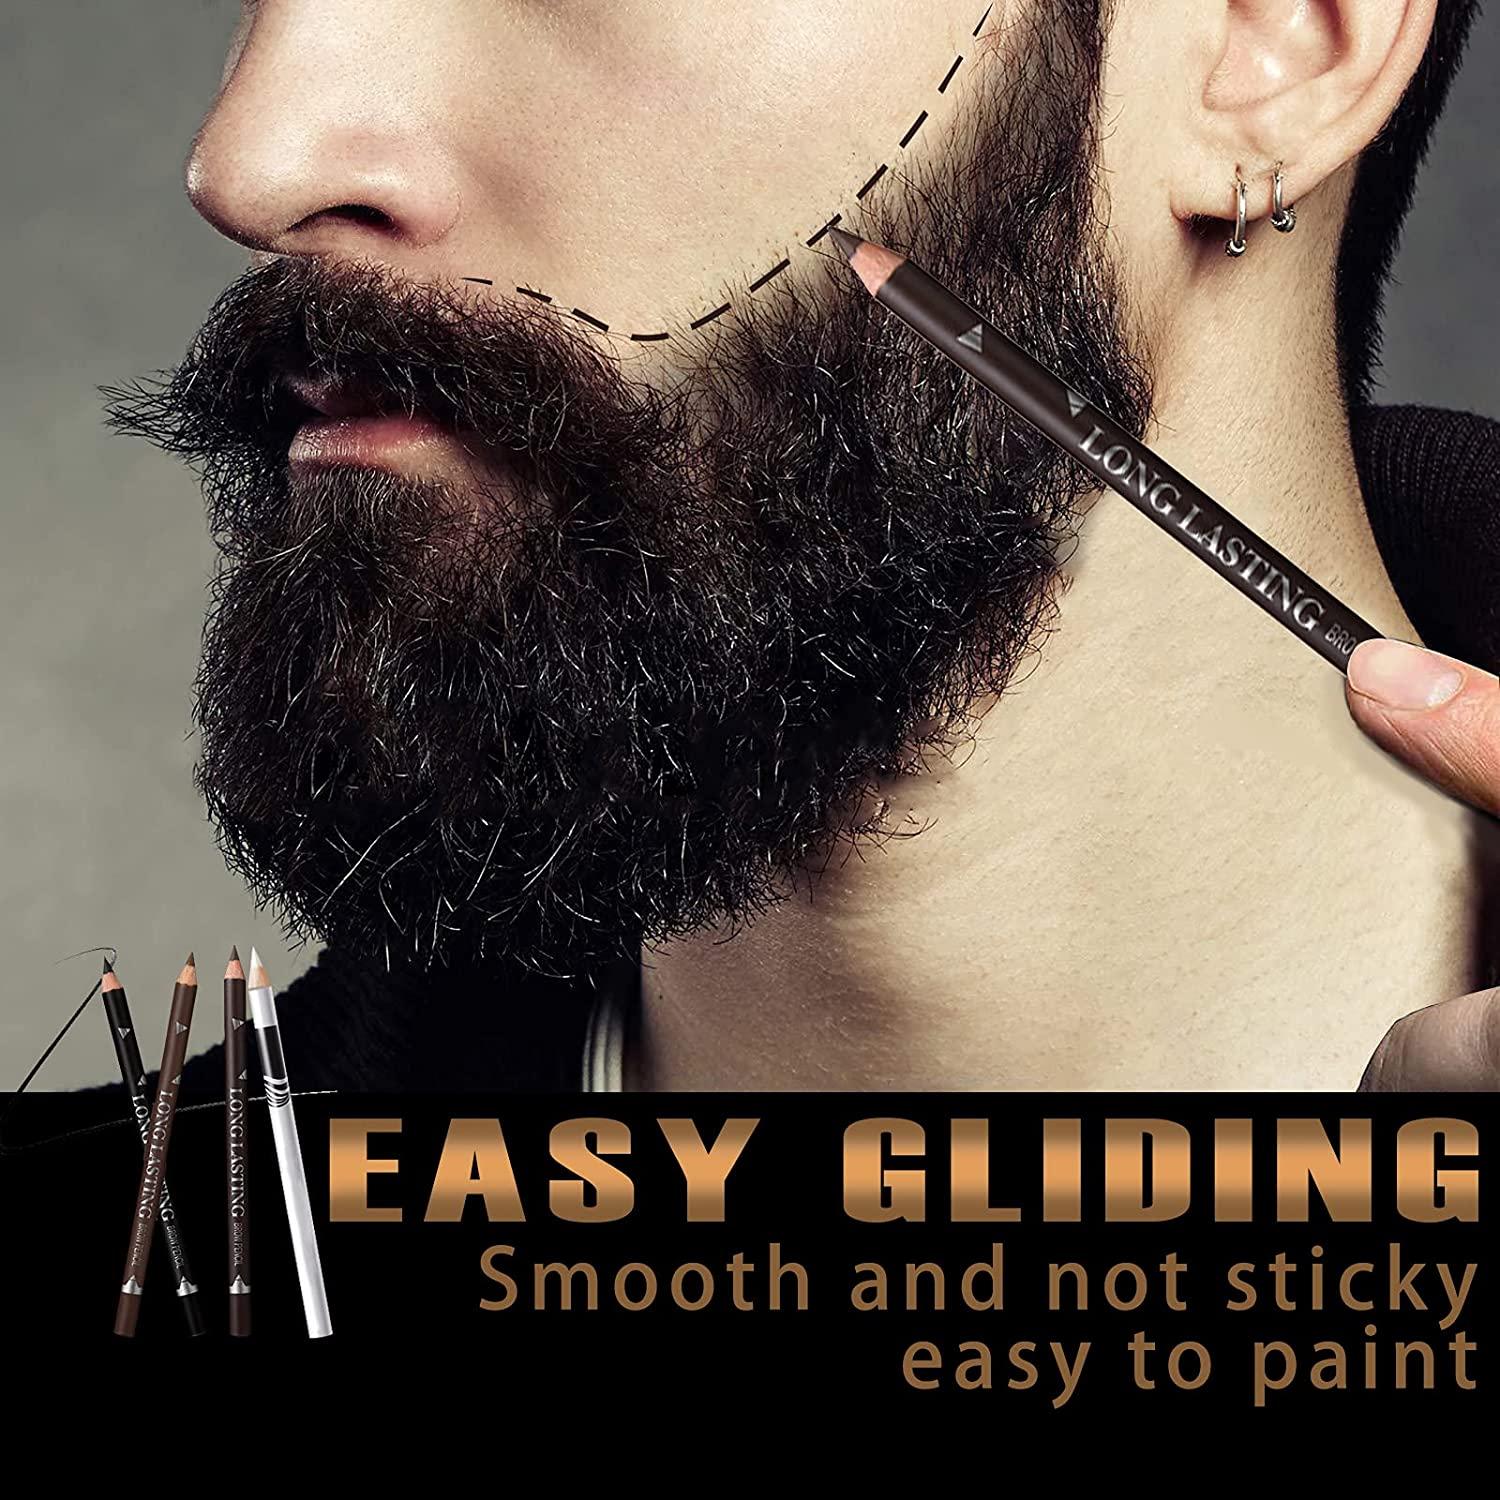 Level 3 Color Liner Pencils - Hair Tattoo, Hairline Outliner and Design Pen  - Professional Barber Engraving and Portrait Lining Pencil, Black